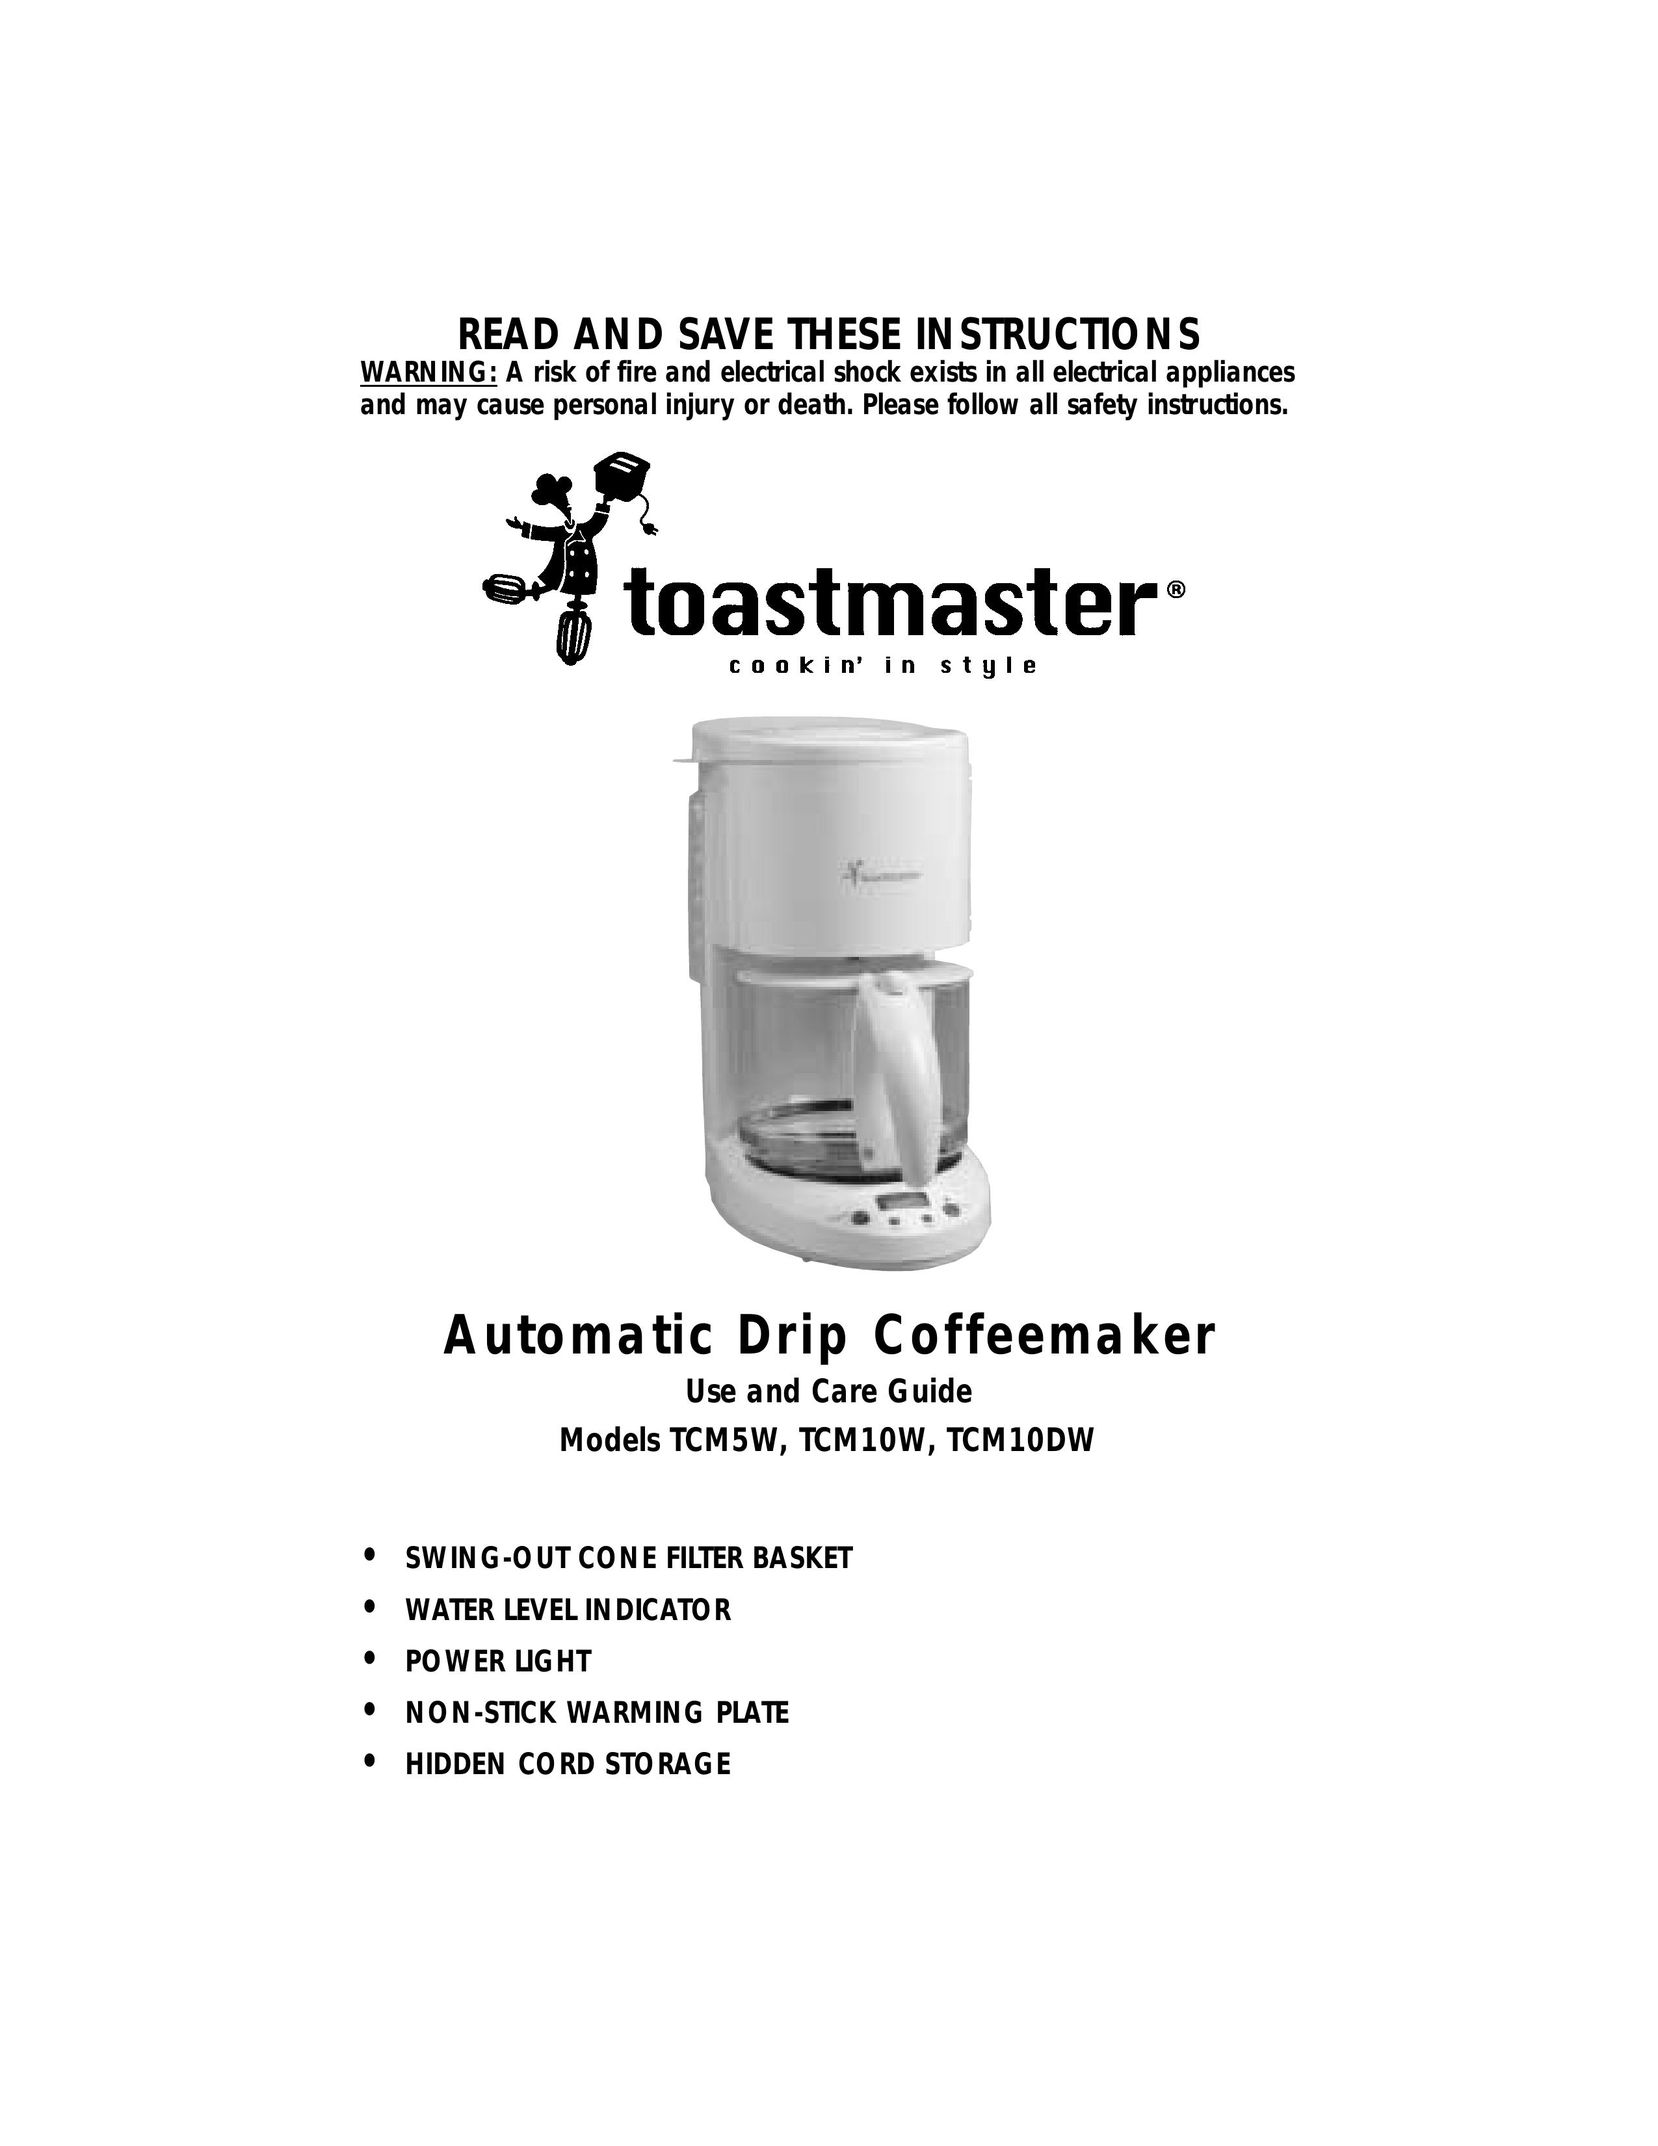 Toastmaster TCM10DW Coffeemaker User Manual